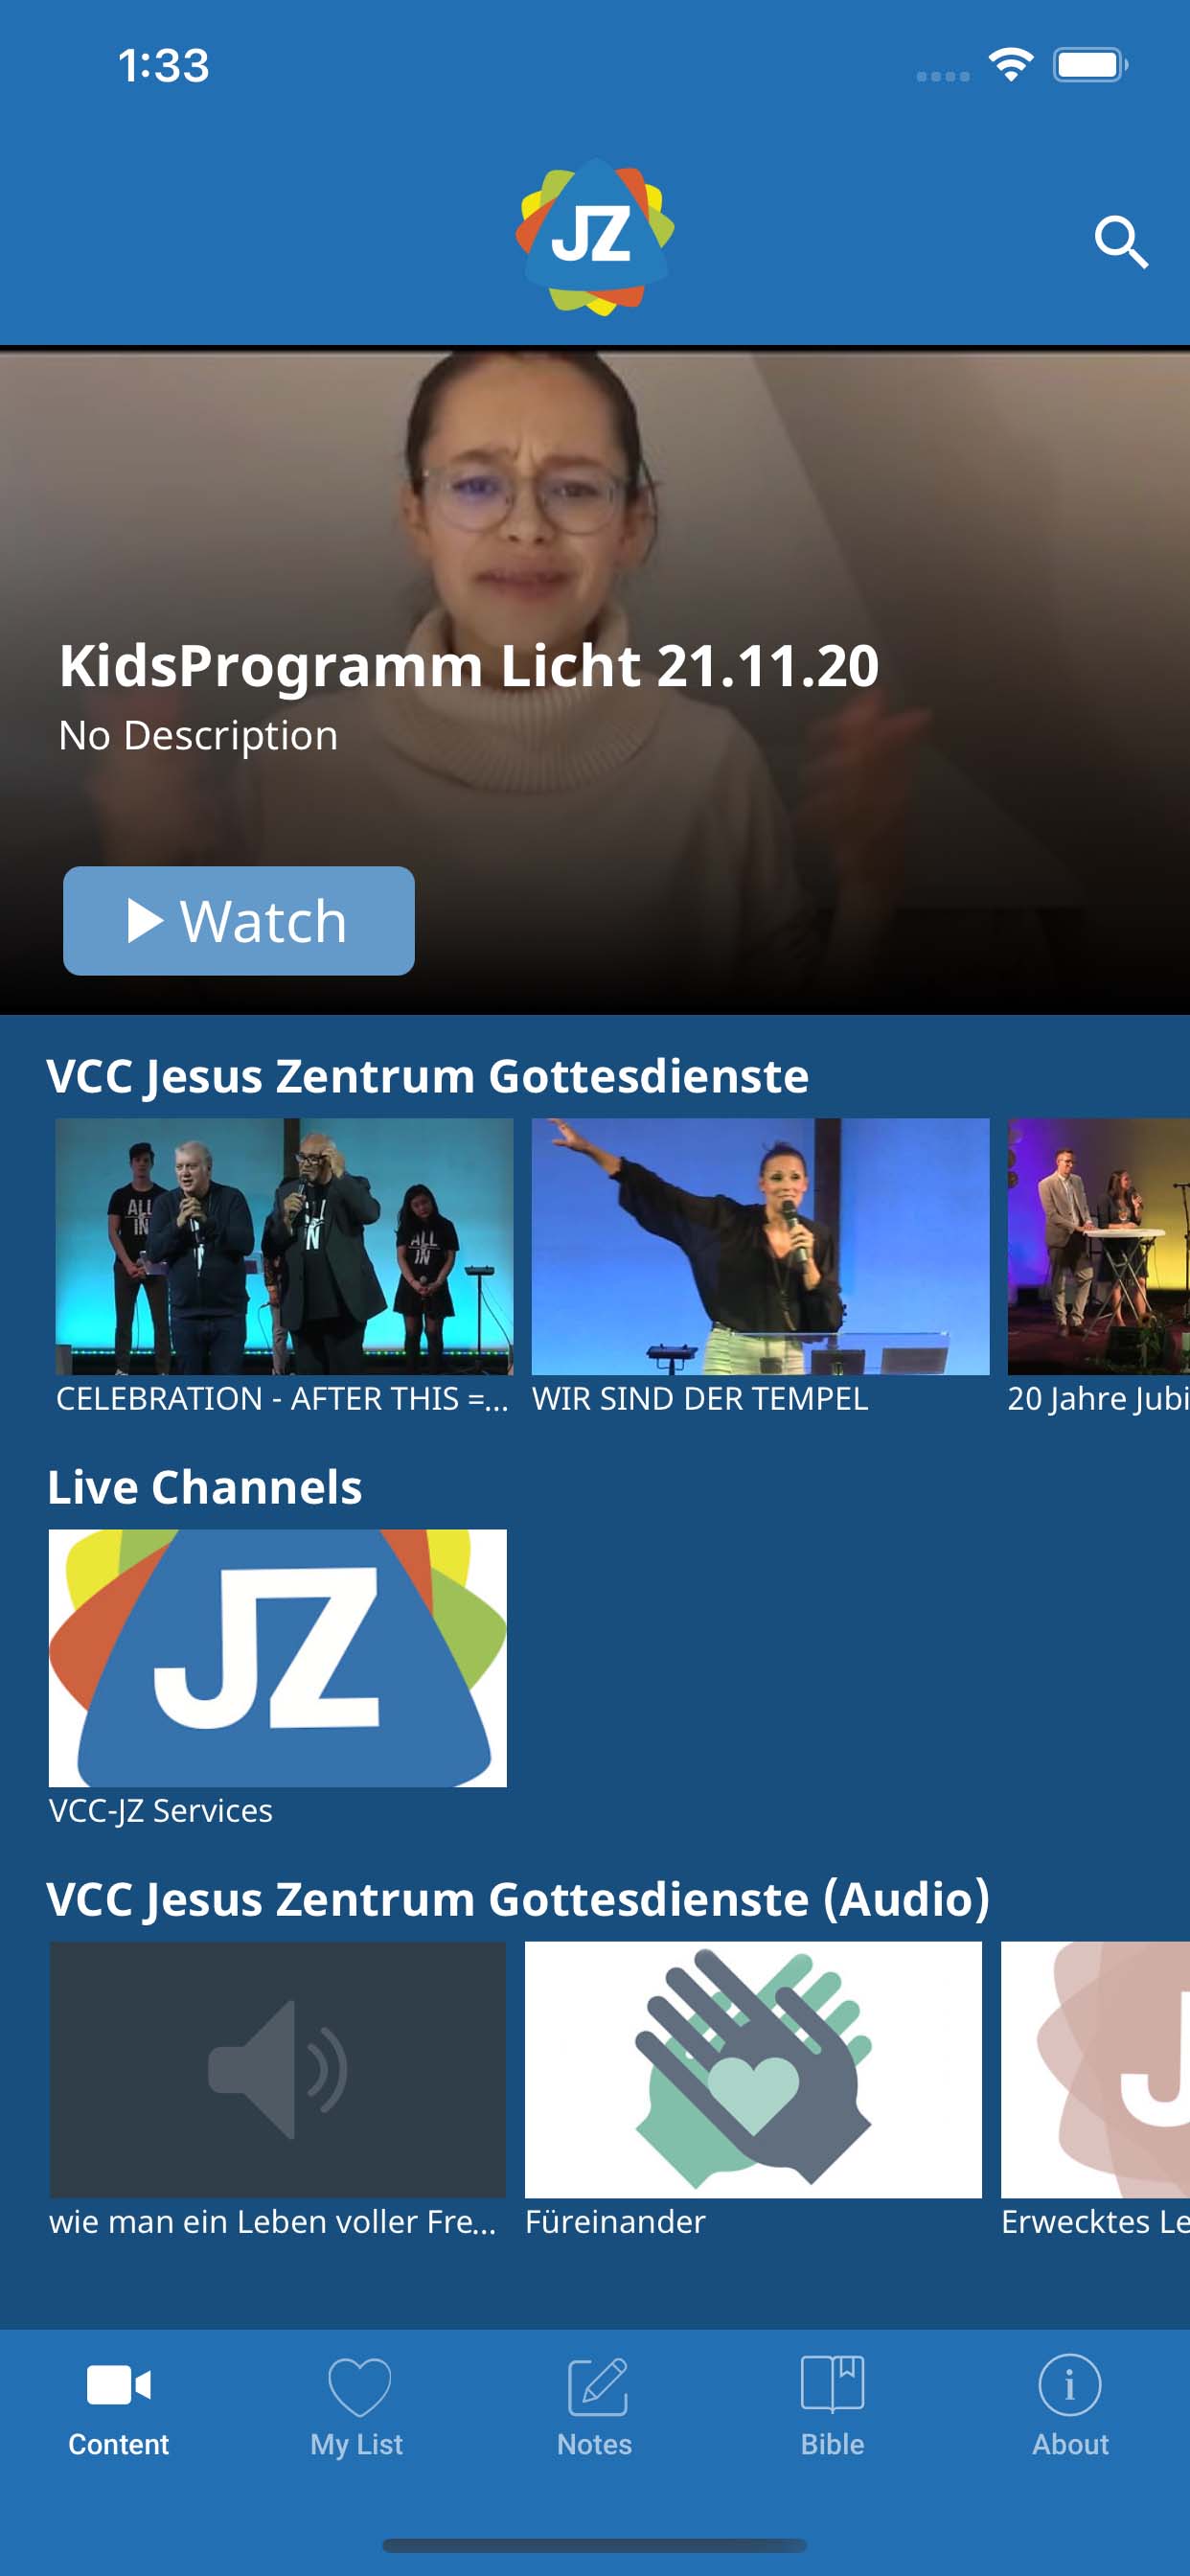 VCC JesusZentrum Screenshot 002